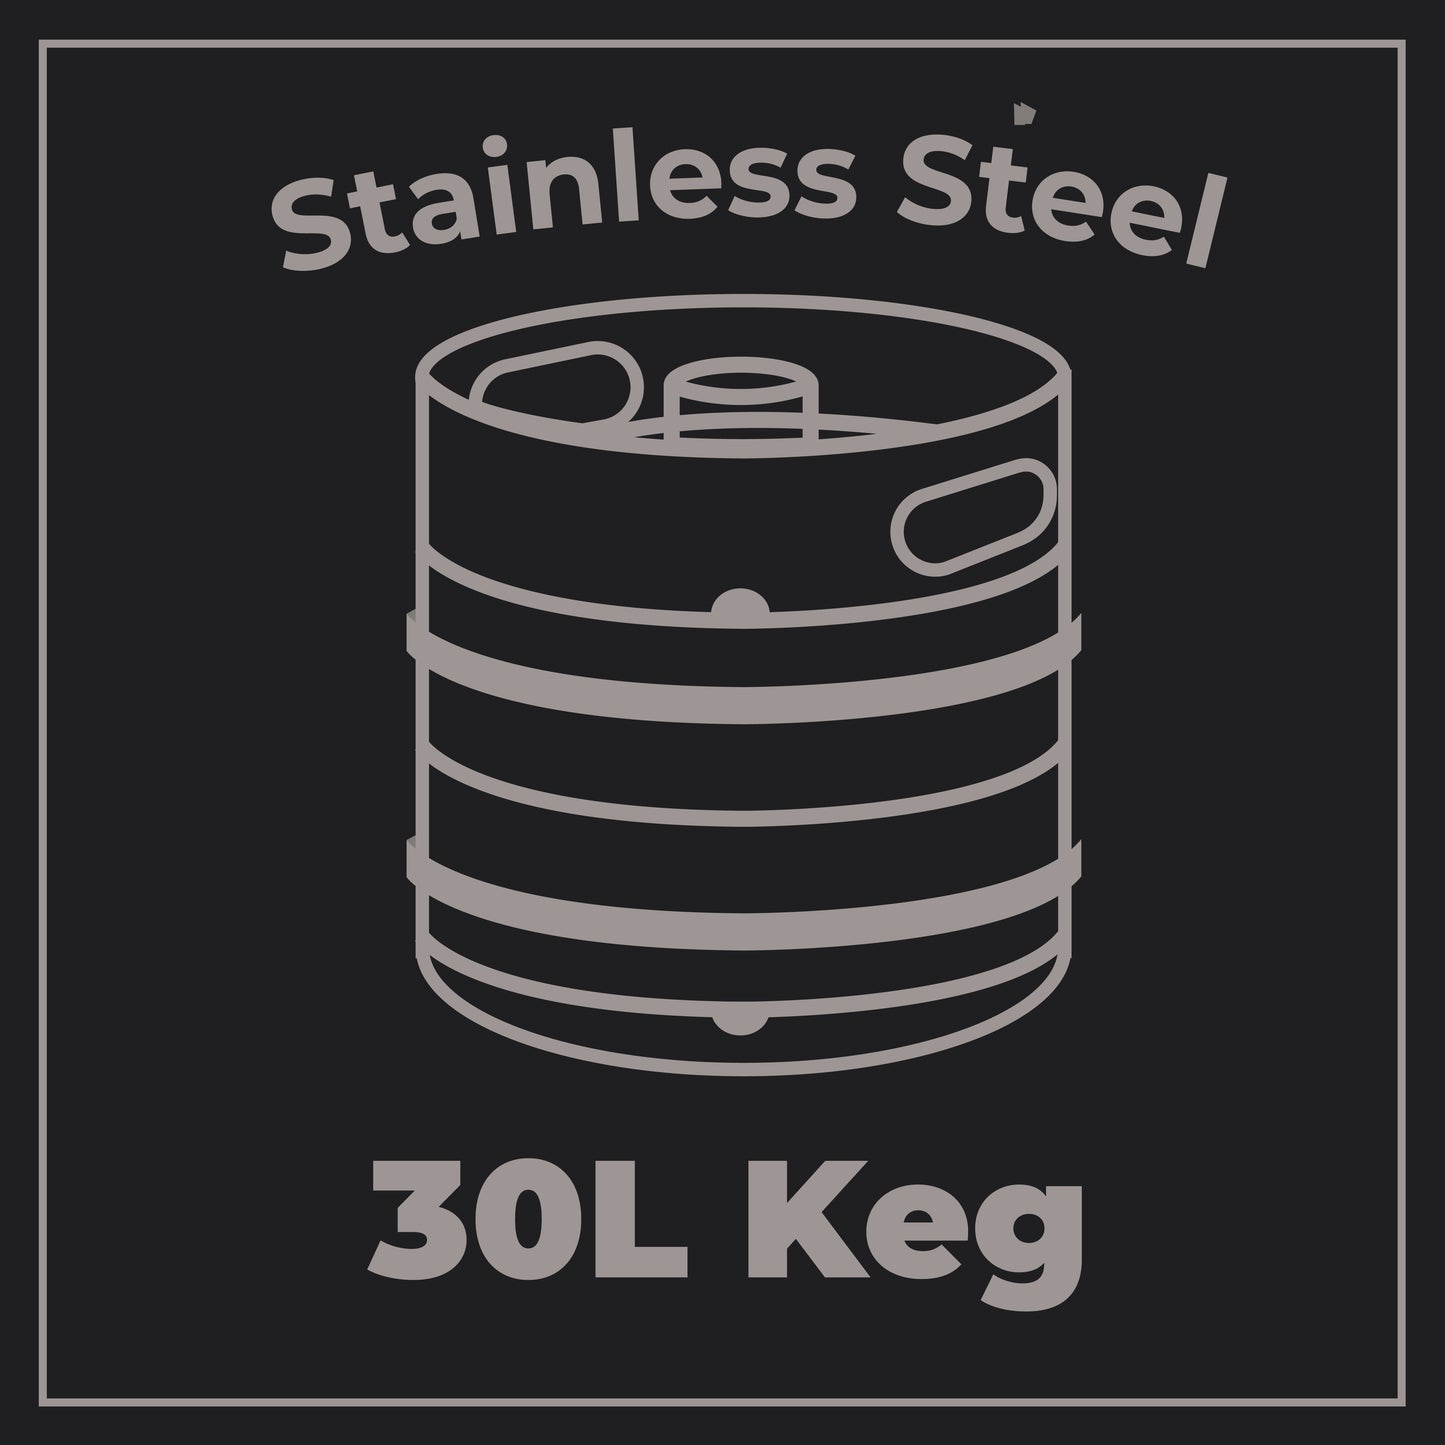 Larkins Brewing Co. - Tiny Sesh IPA - Session IPA - 4% ABV - 30L Keg (Stainless Steel Keg)